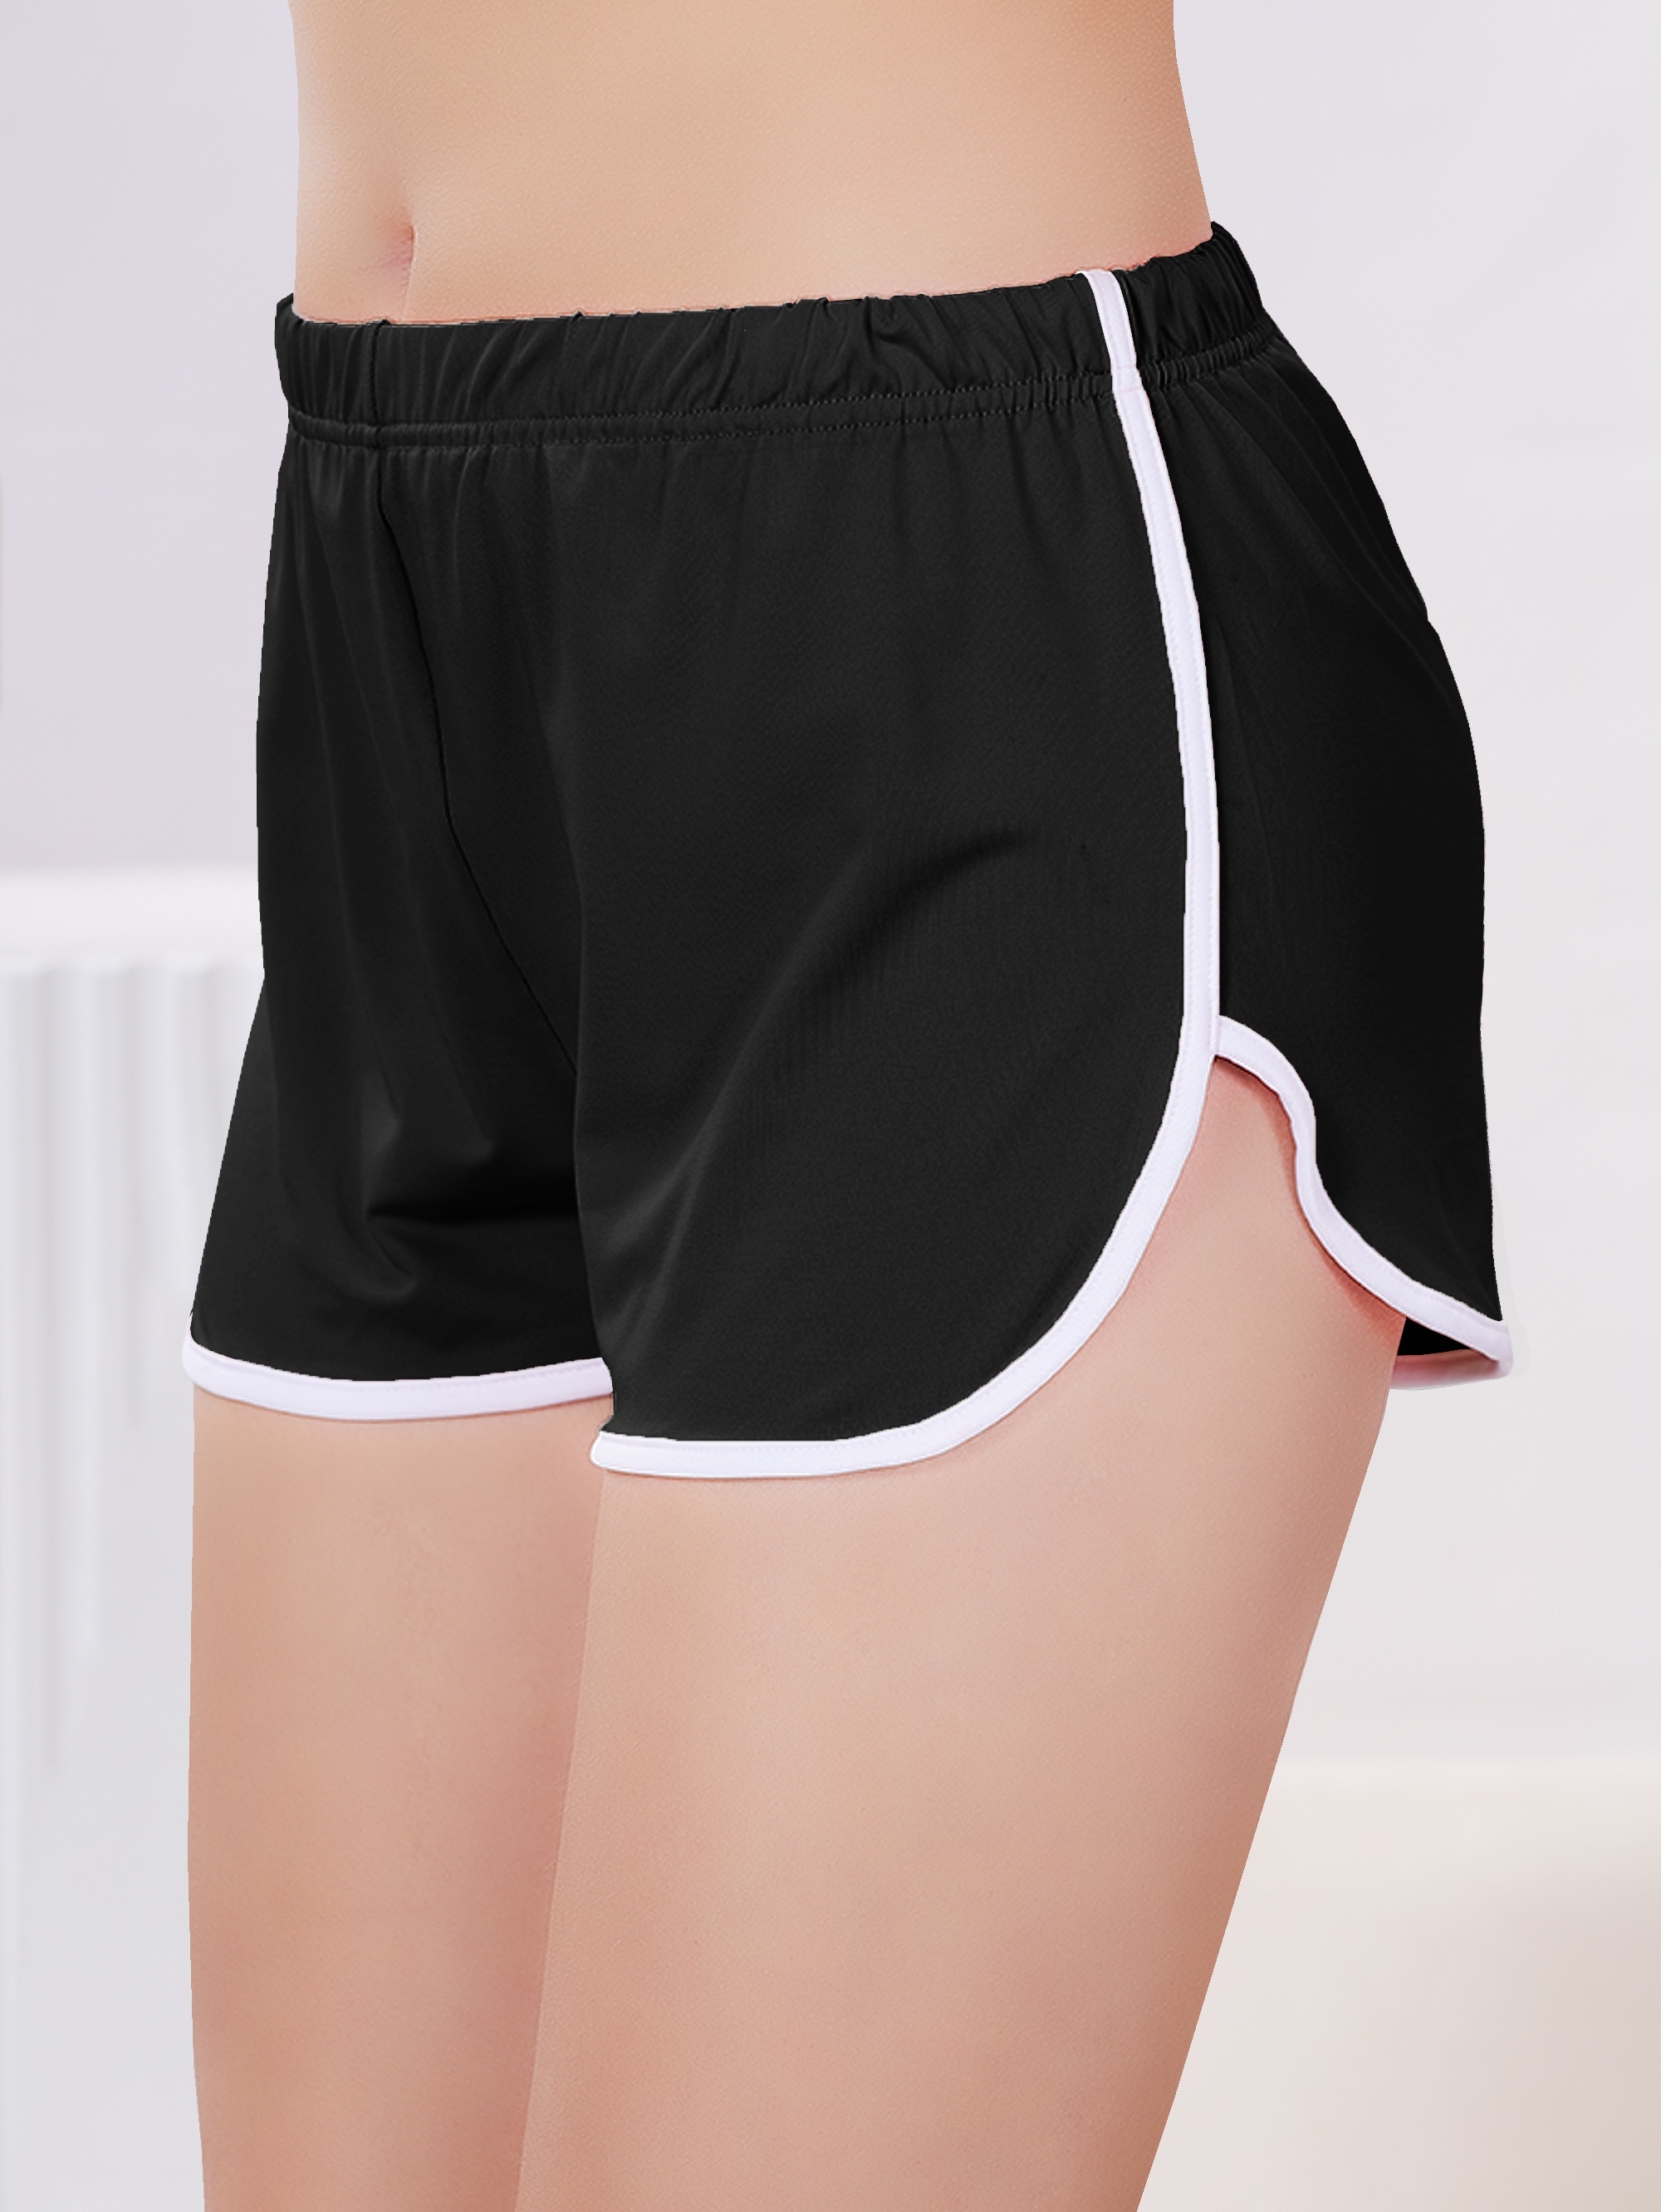 casual solid binding pajama bottoms elastic high waist slim fit shorts womens sleepwear